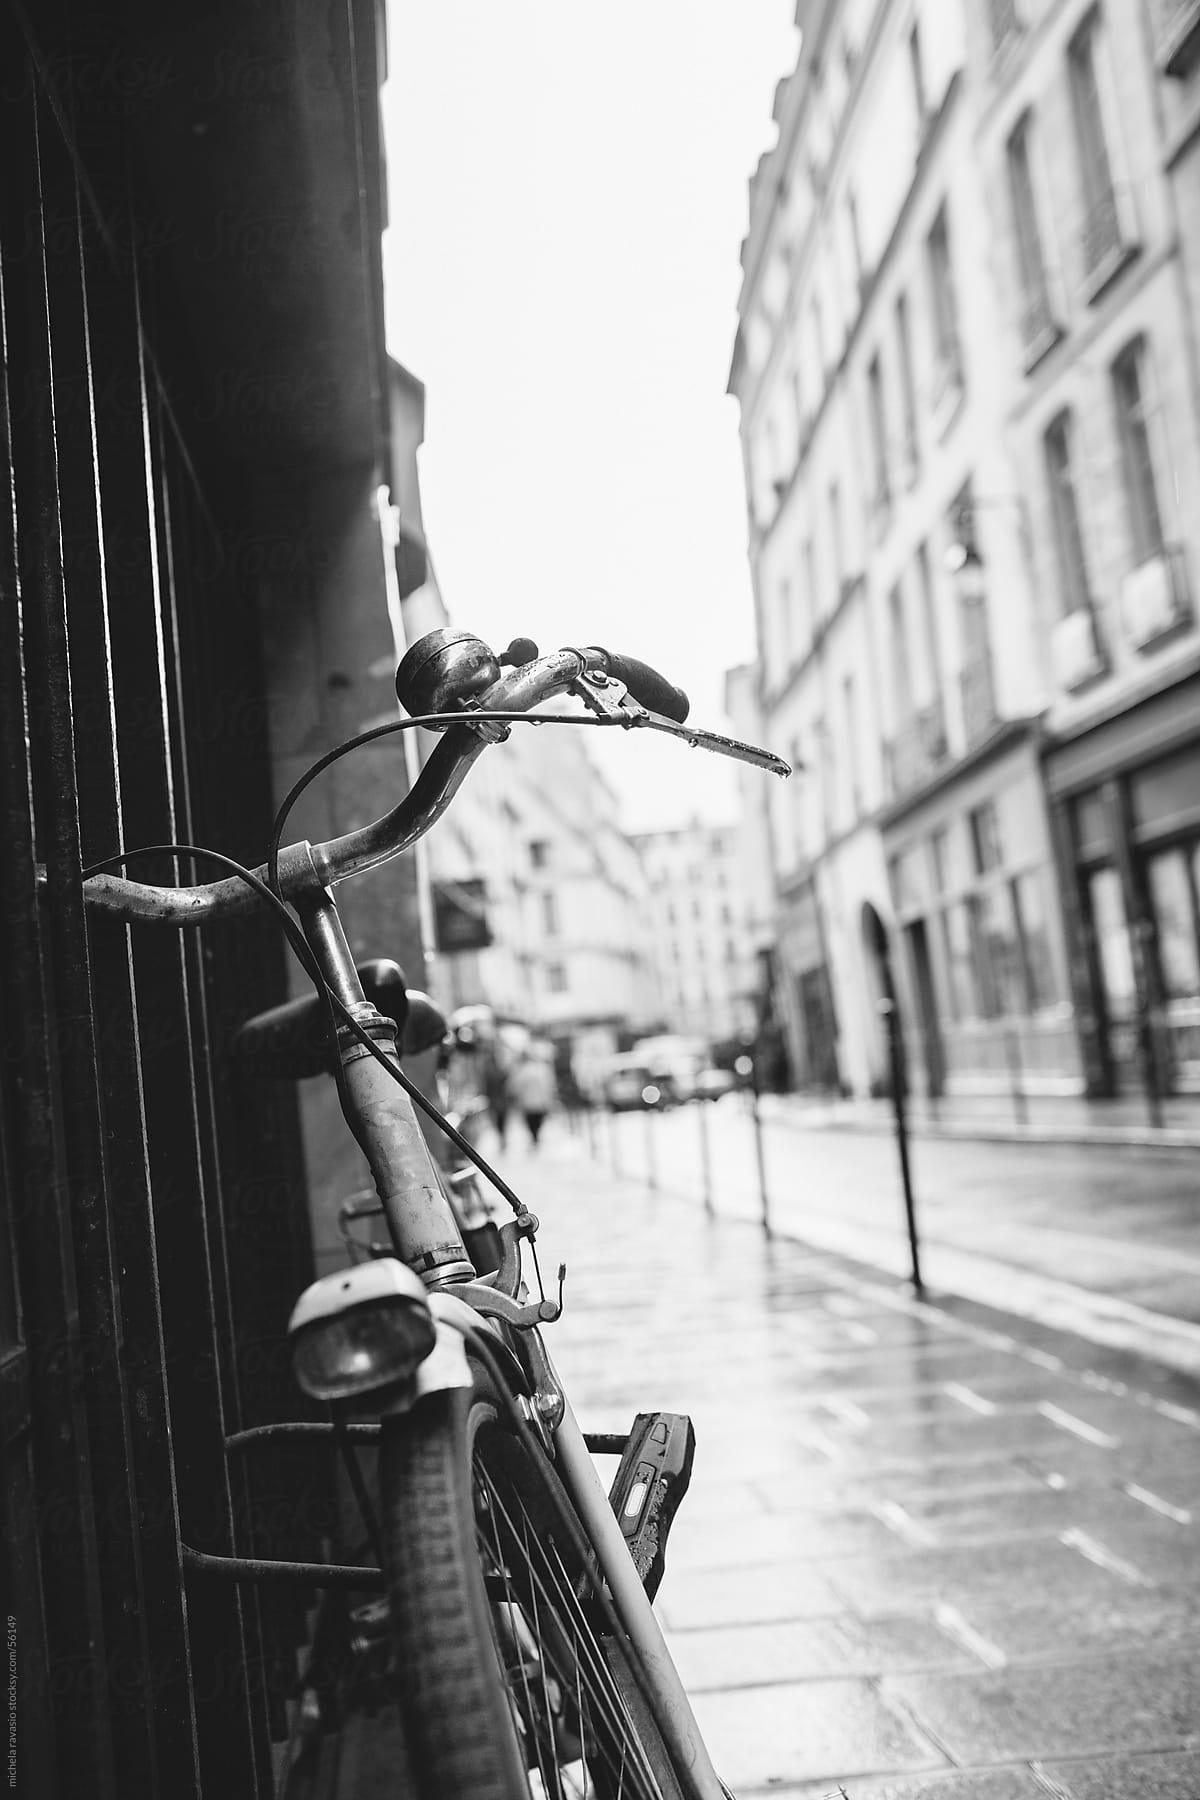 Bicycle on a street in Paris